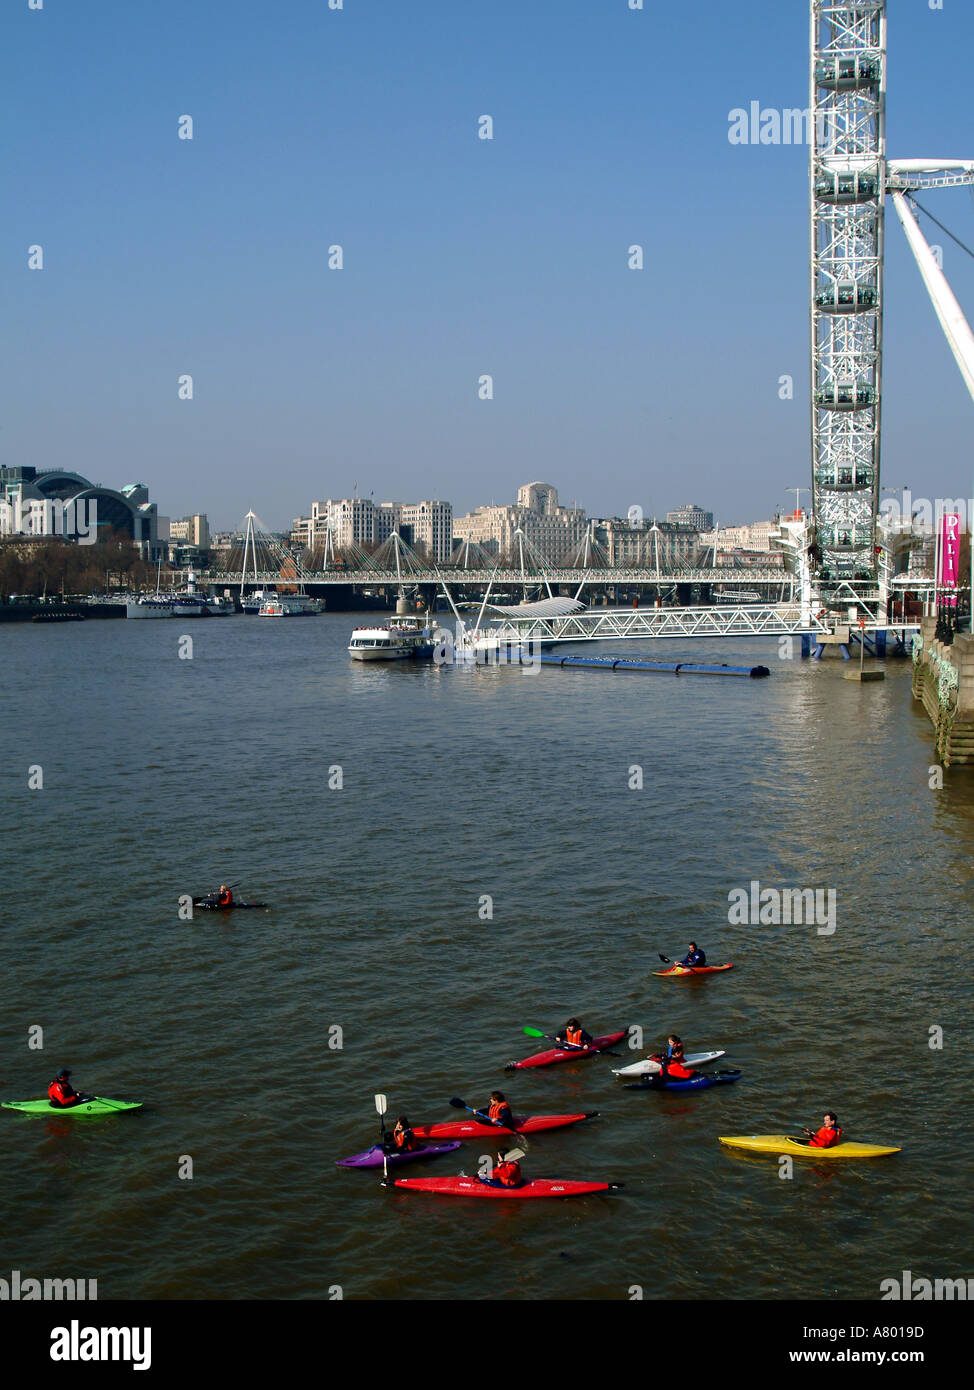 england london river thames the london eye county hall Stock Photo